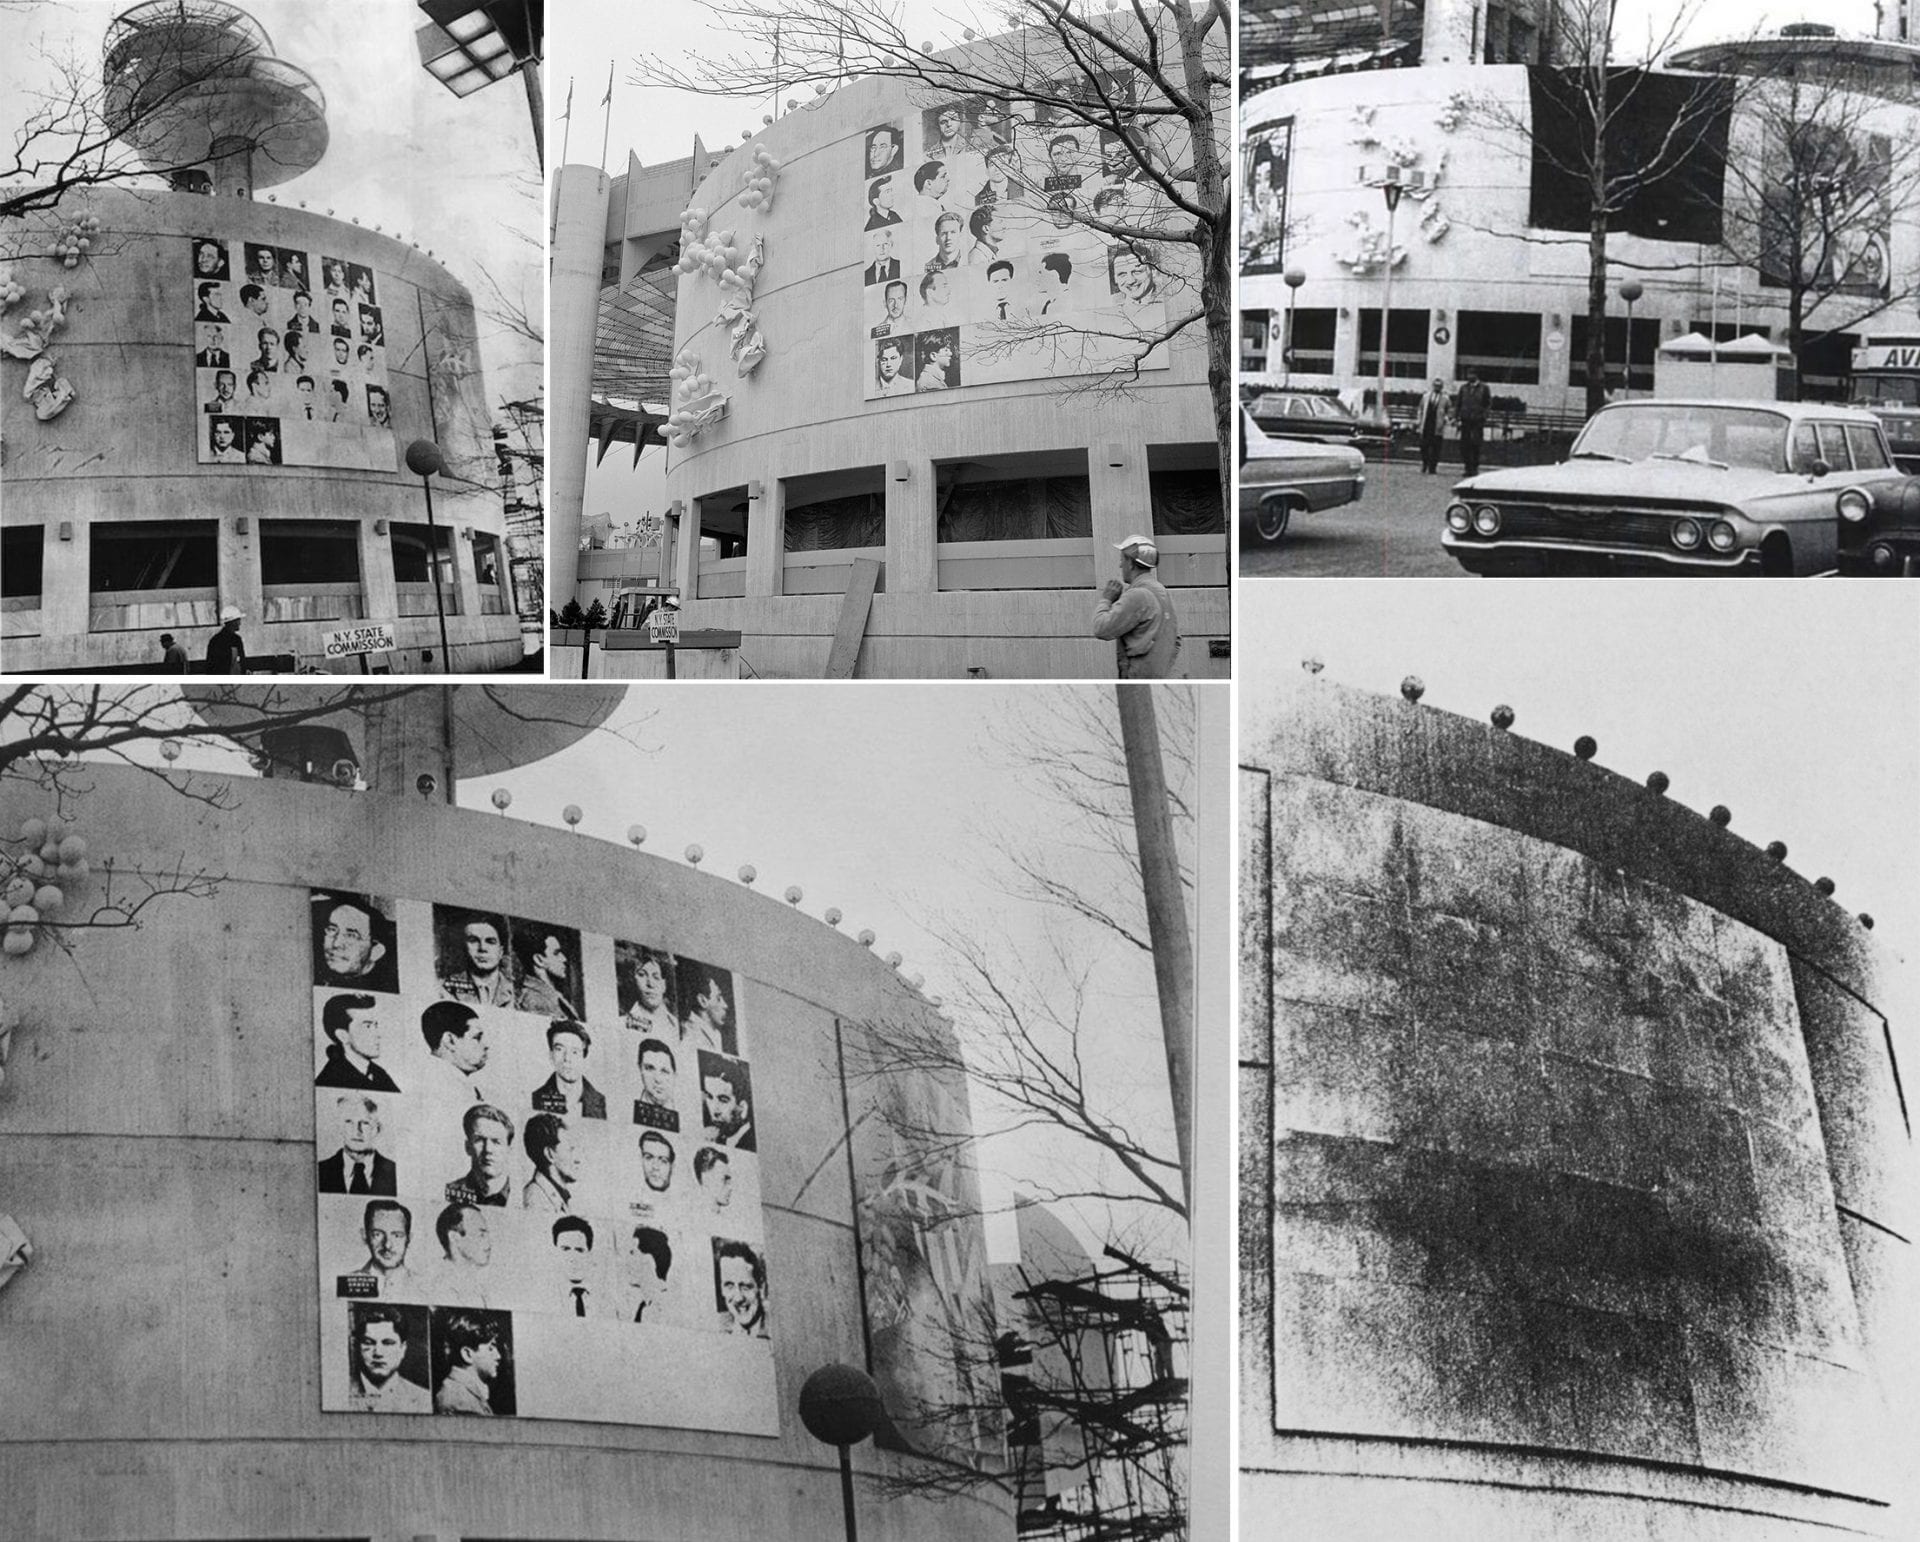 Thirteen Most Wanted Men, 1964. New York State Pavillion. Feria Mundial. Andy Warhol.